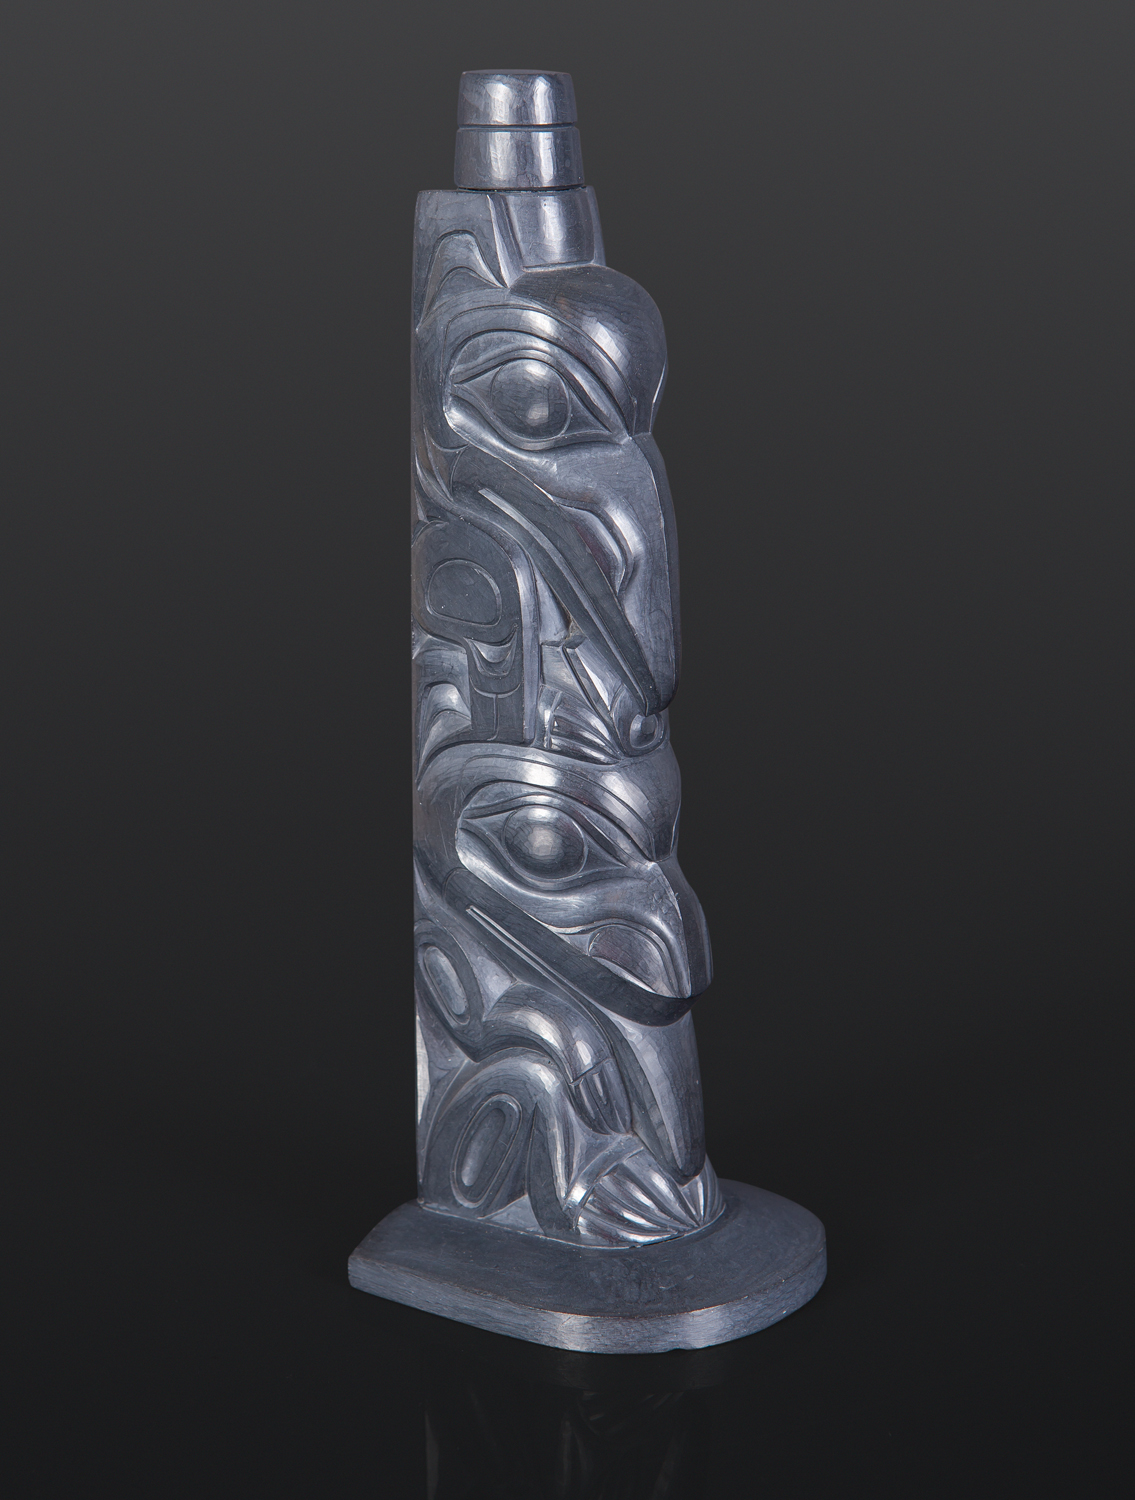 Raven and Bear Gary Minaker-Russ Haida Argillite carving 1¾” x 1¼” x 7½” $4400